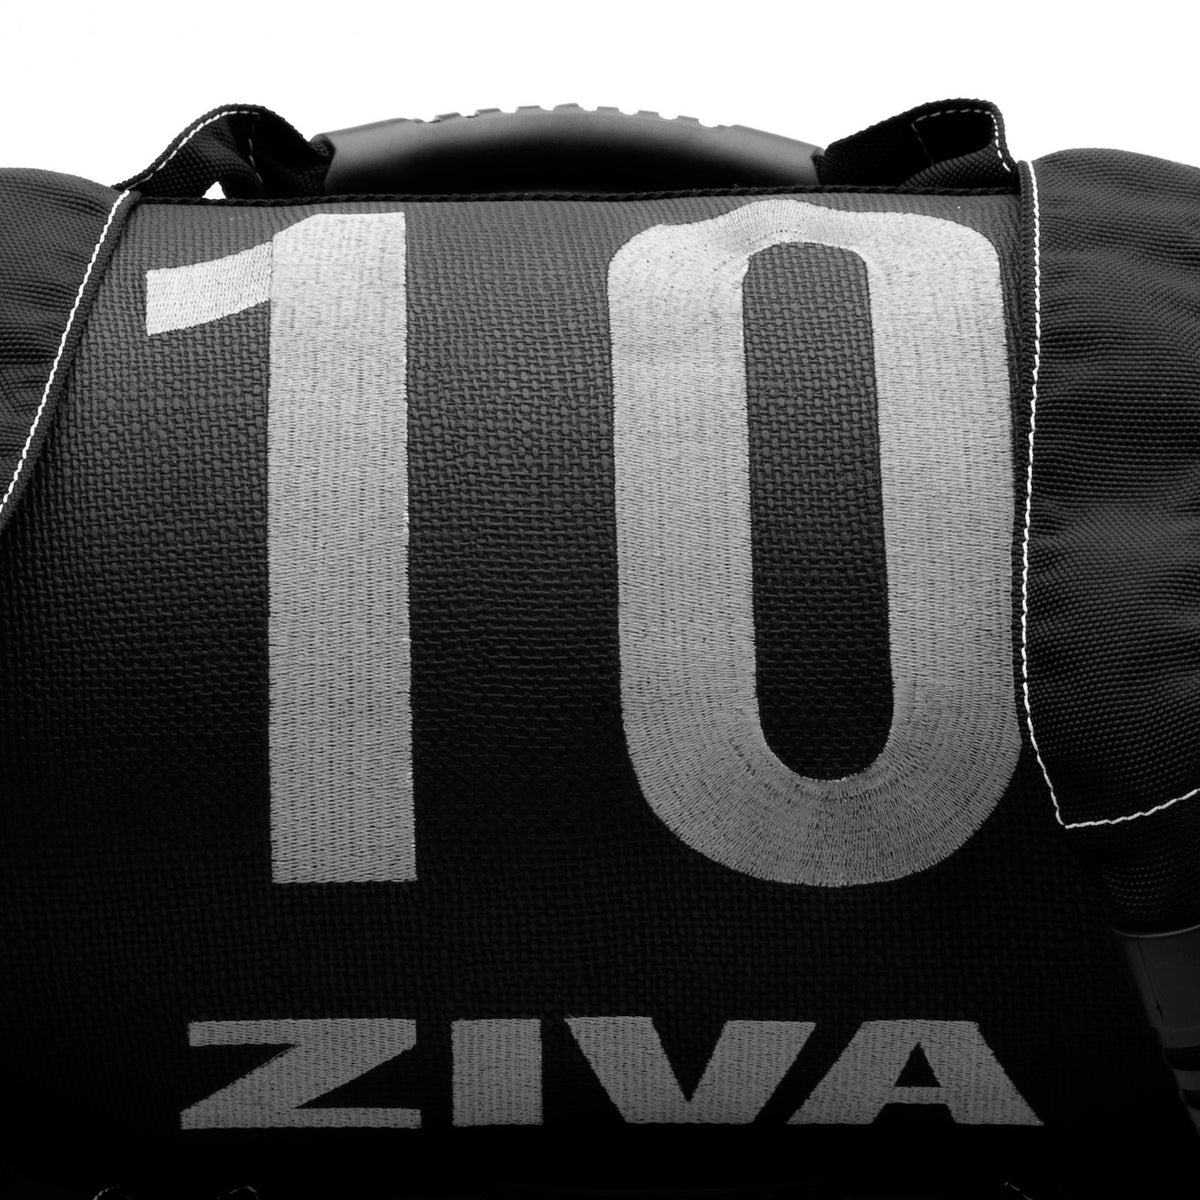 Ziva Premium Power Core Bag